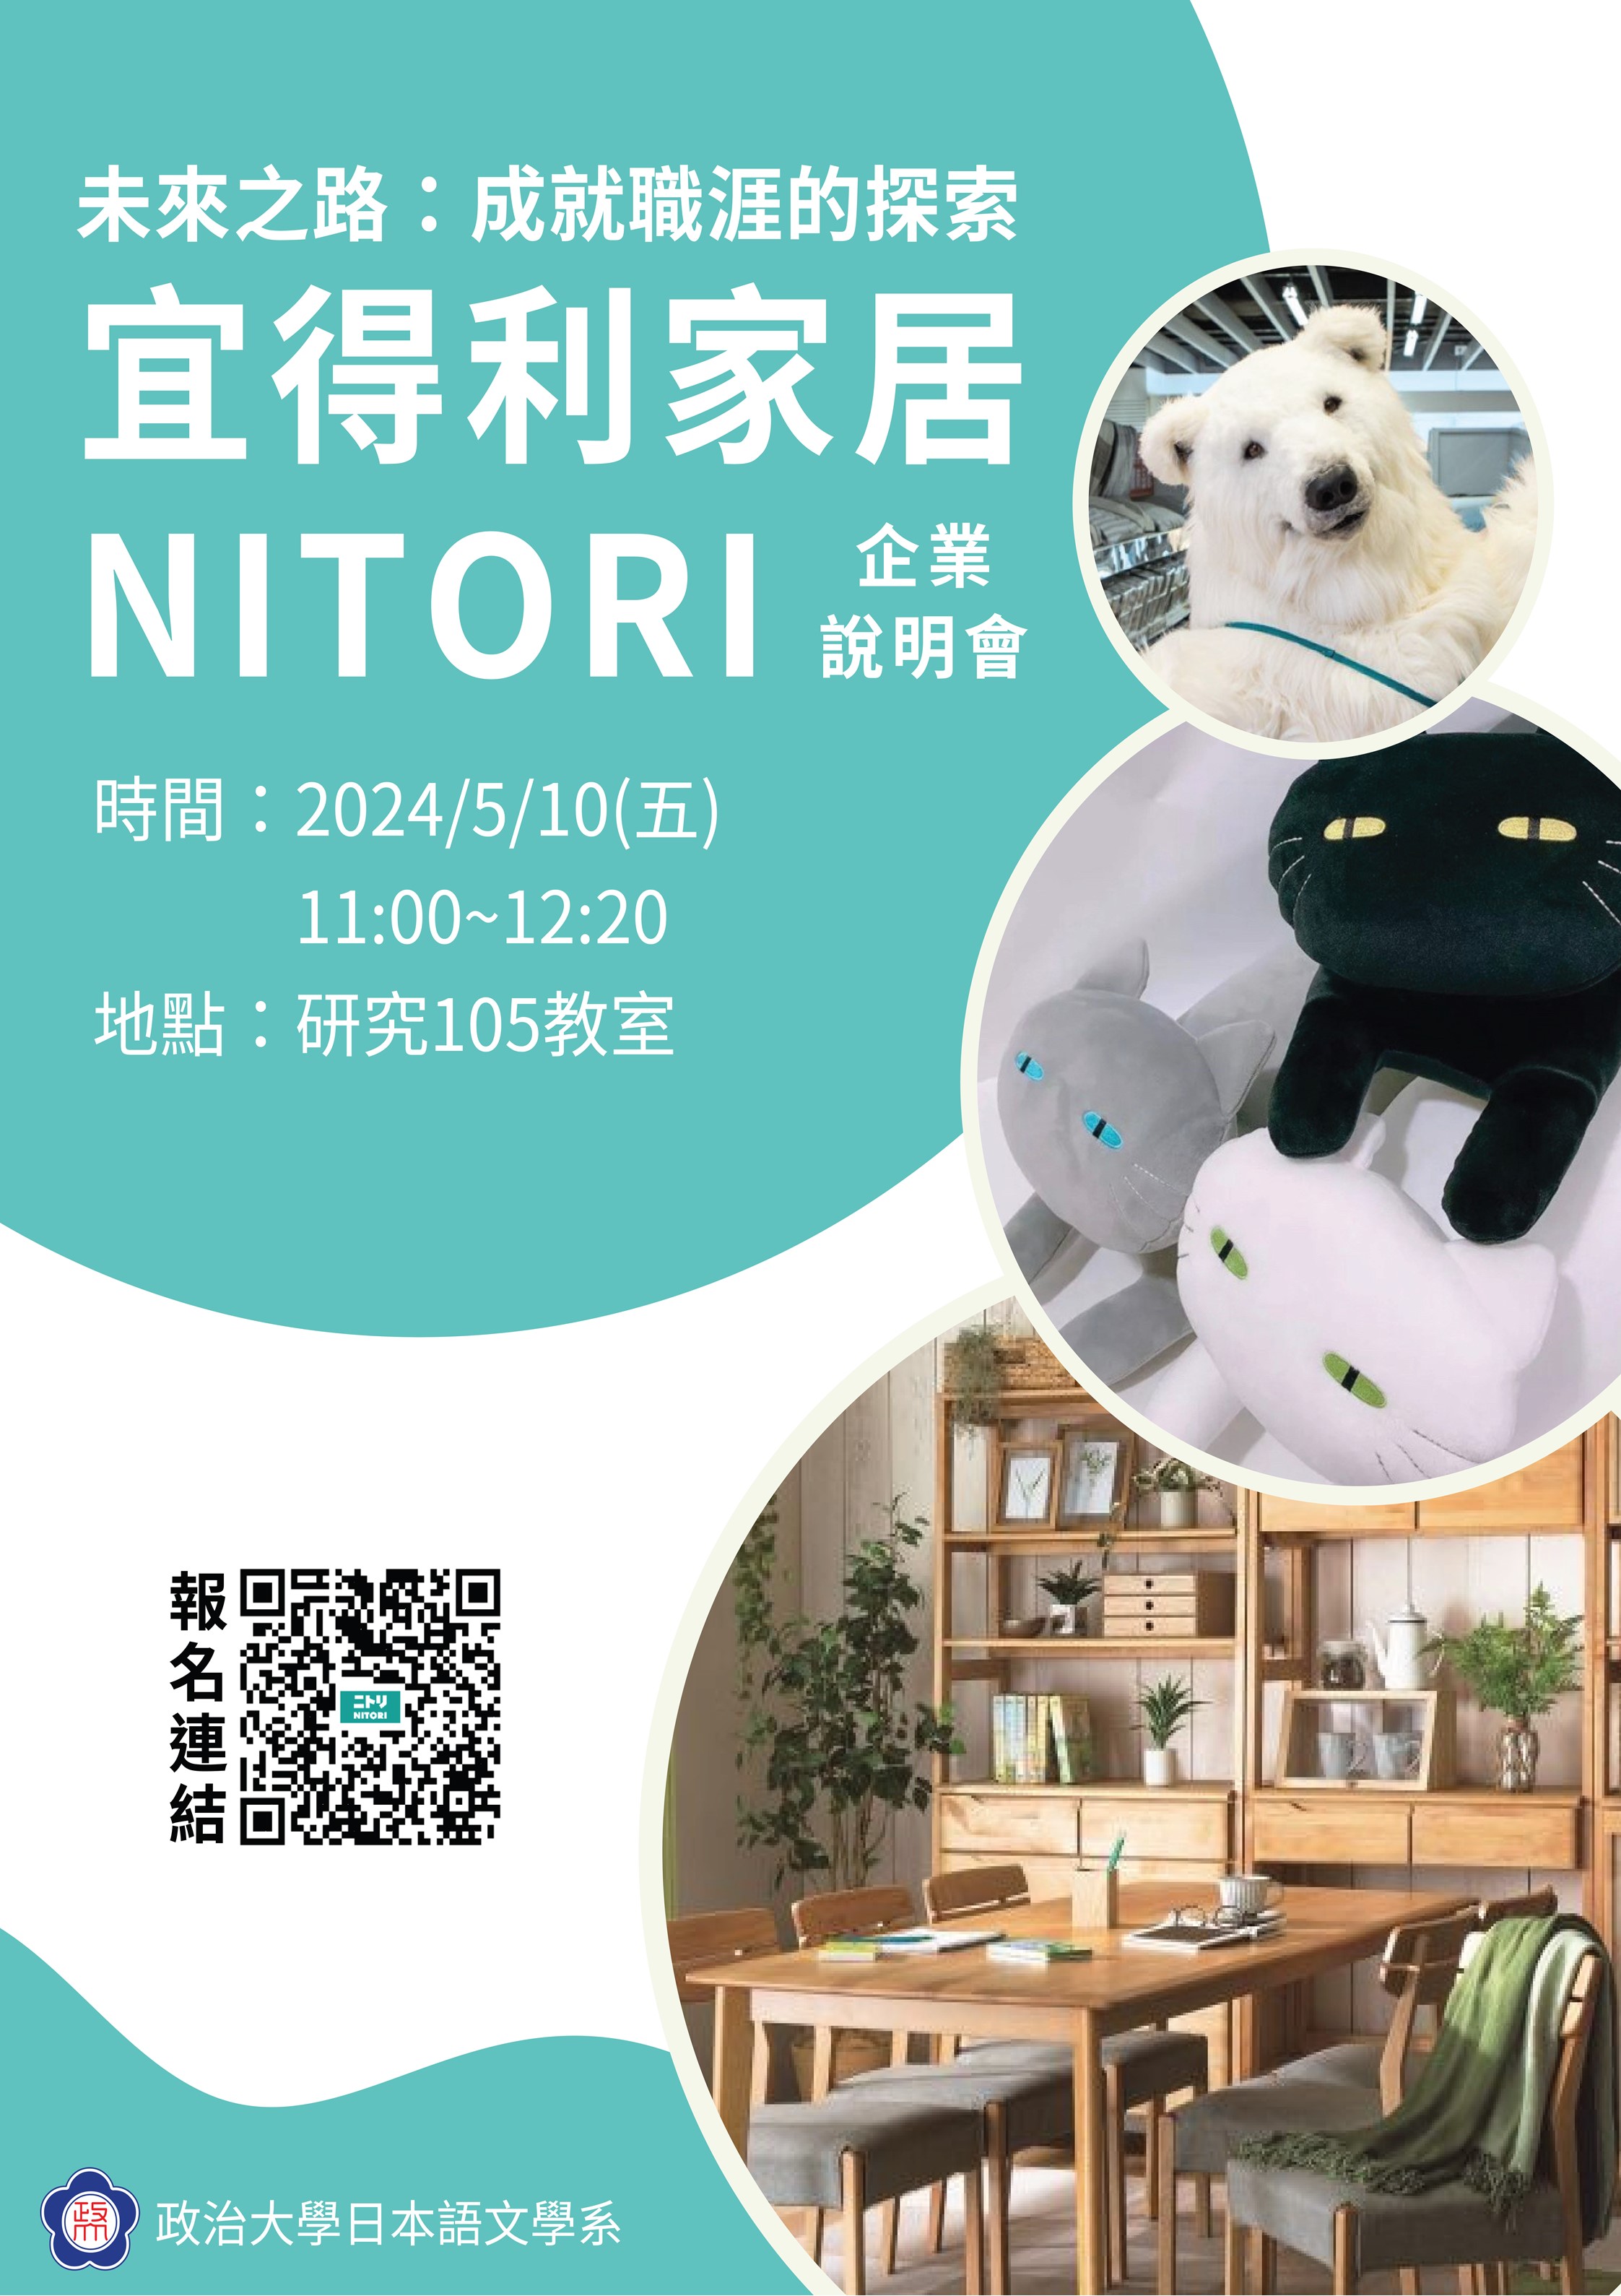 【Career Event】NITORI Corporate Presentation